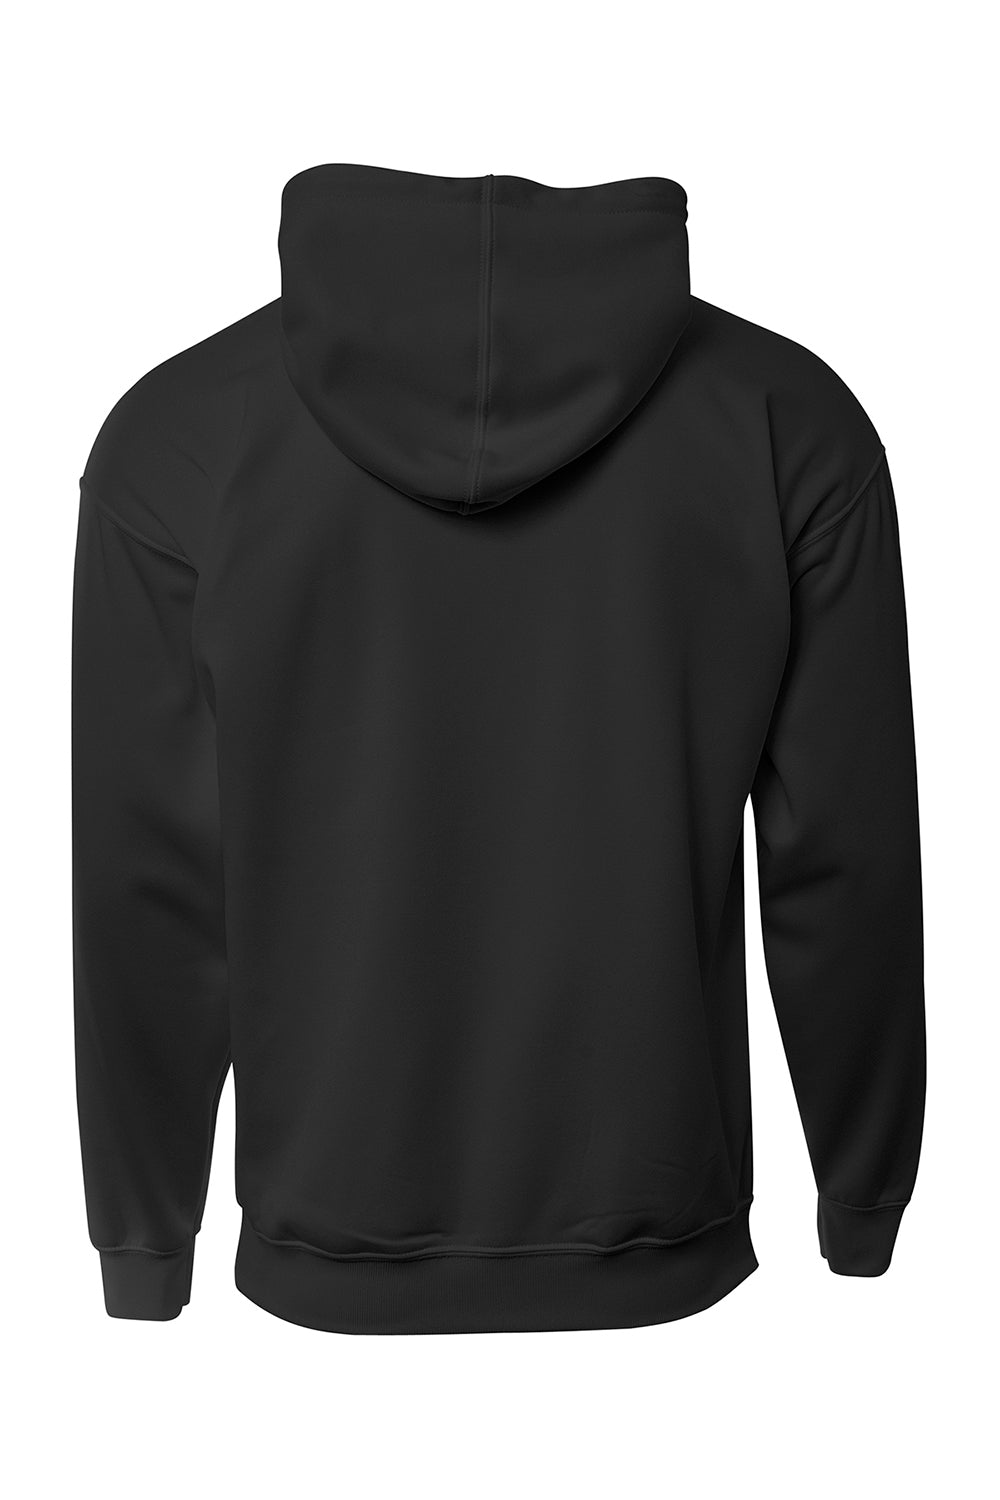 A4 N4279 Mens Sprint Tech Fleece Hooded Sweatshirt Black Flat Back